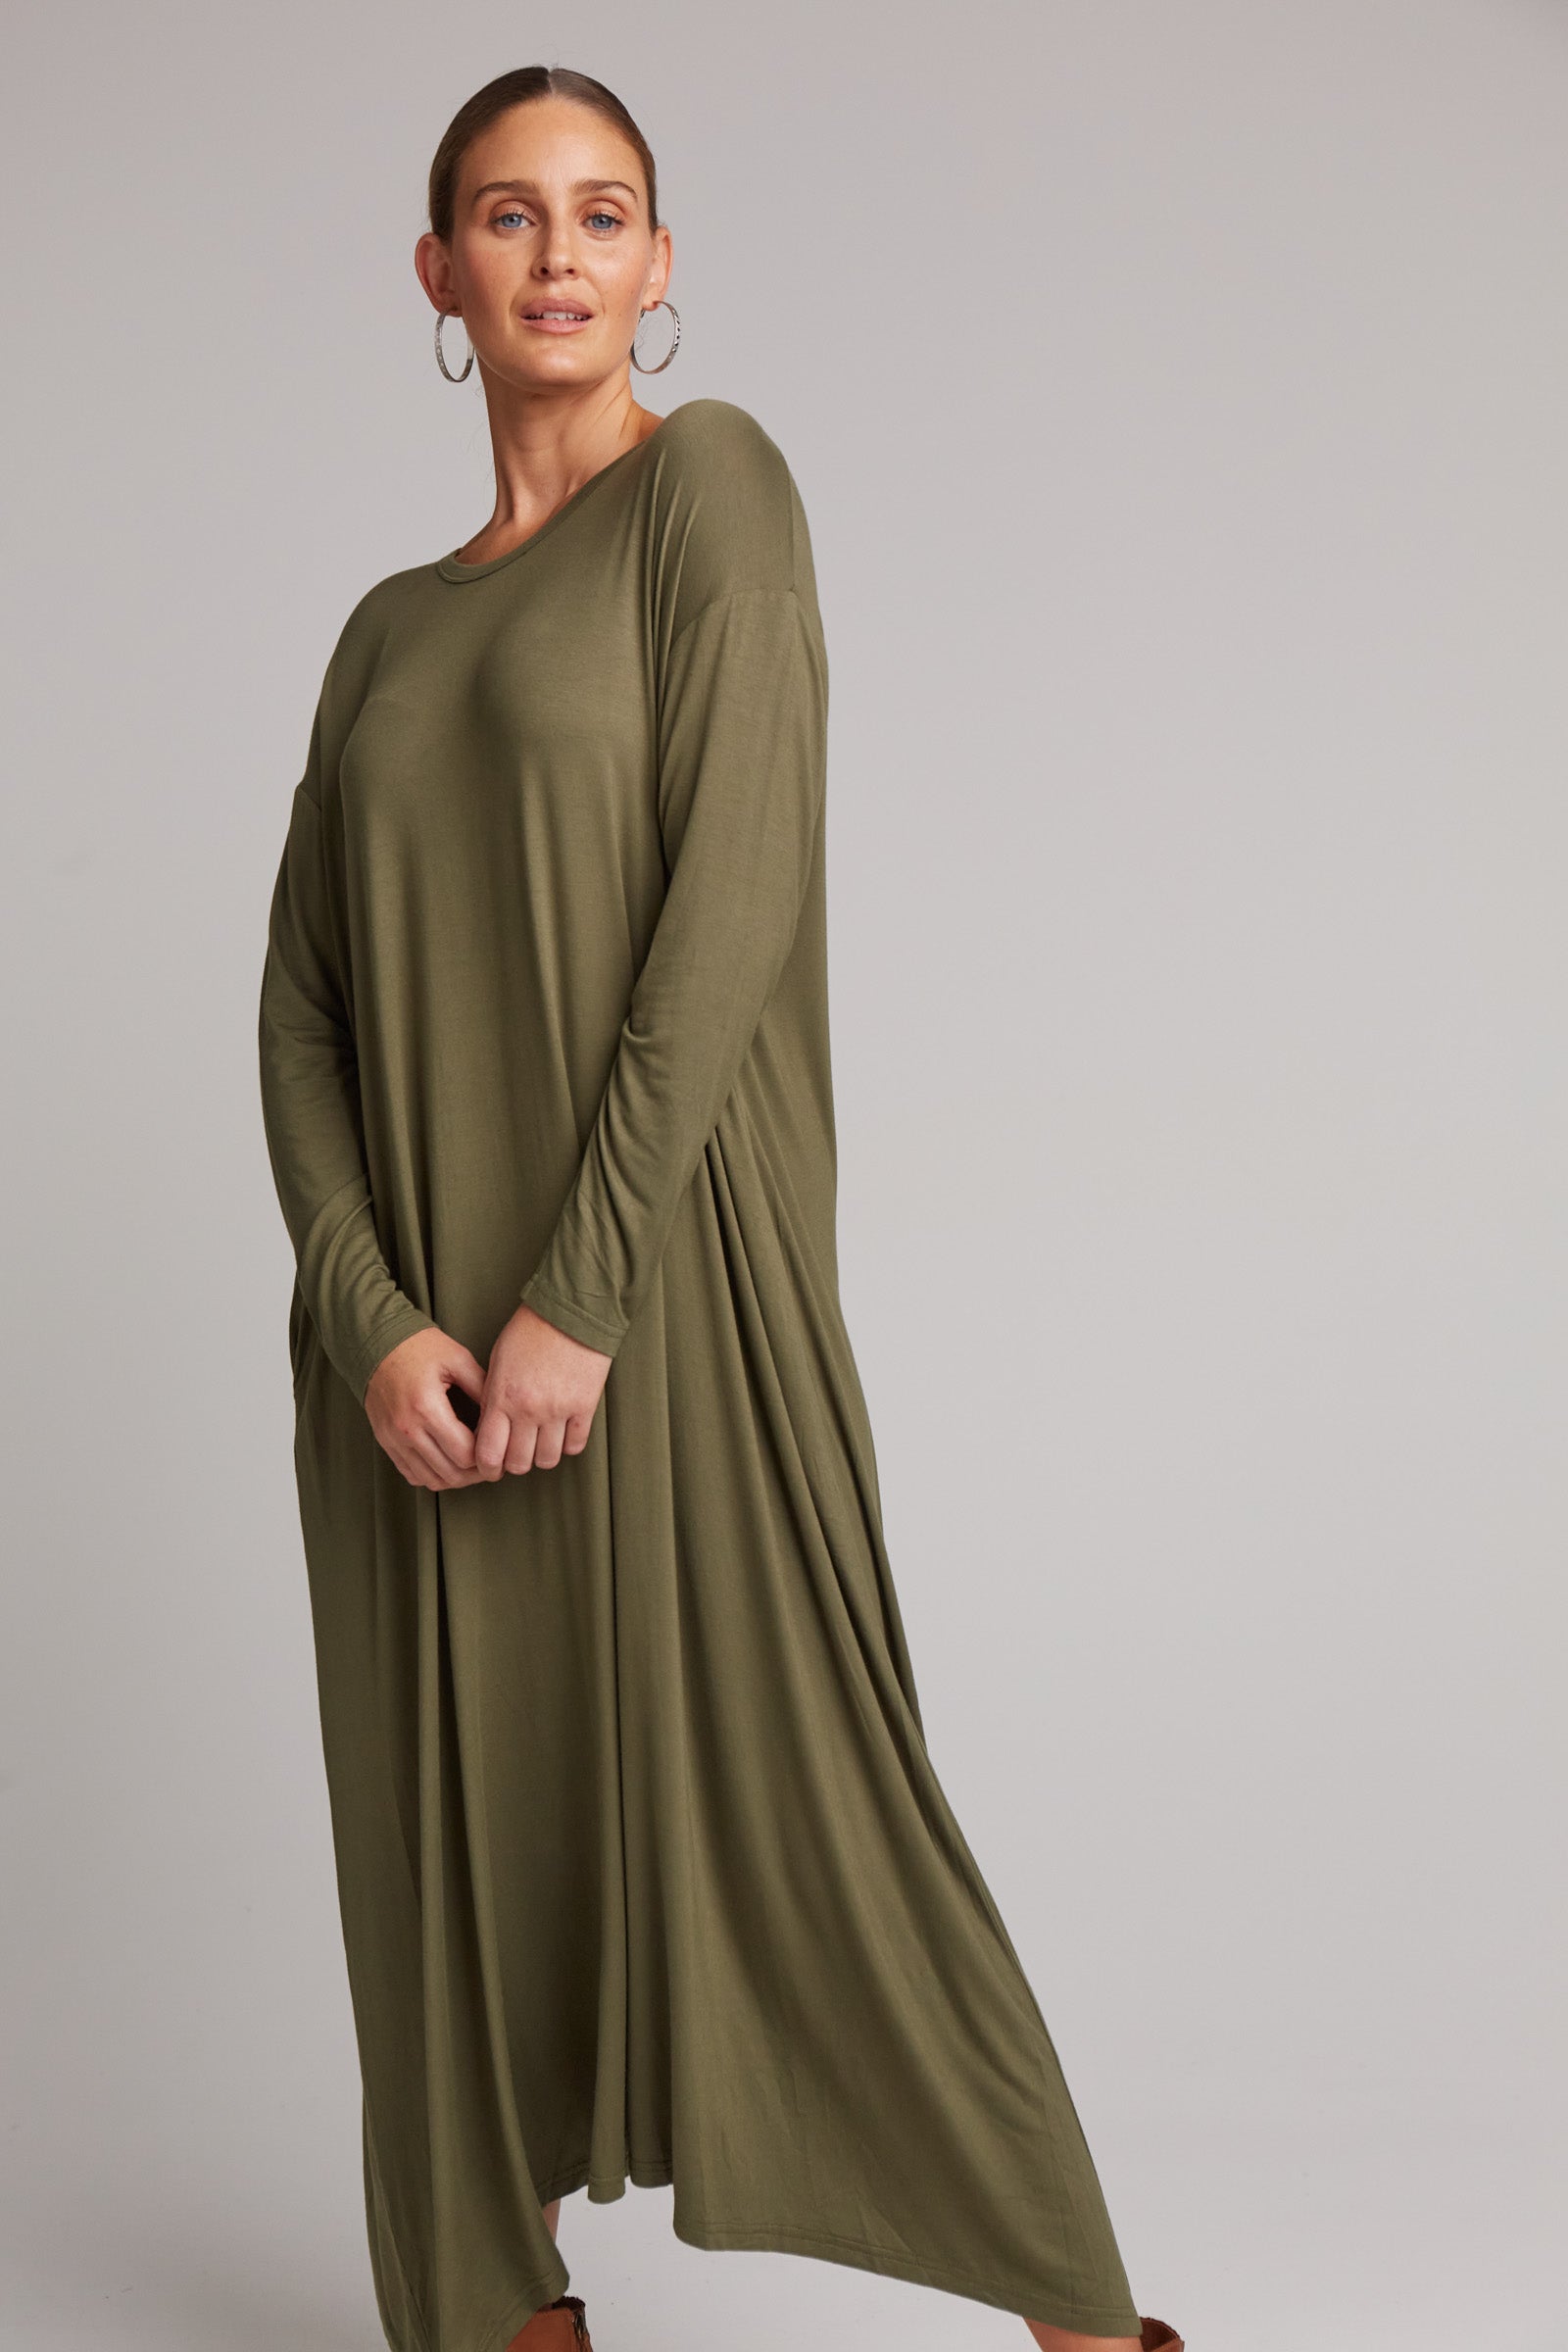 Studio Jersey Dress - Fern - eb&ive Clothing - Dress Maxi